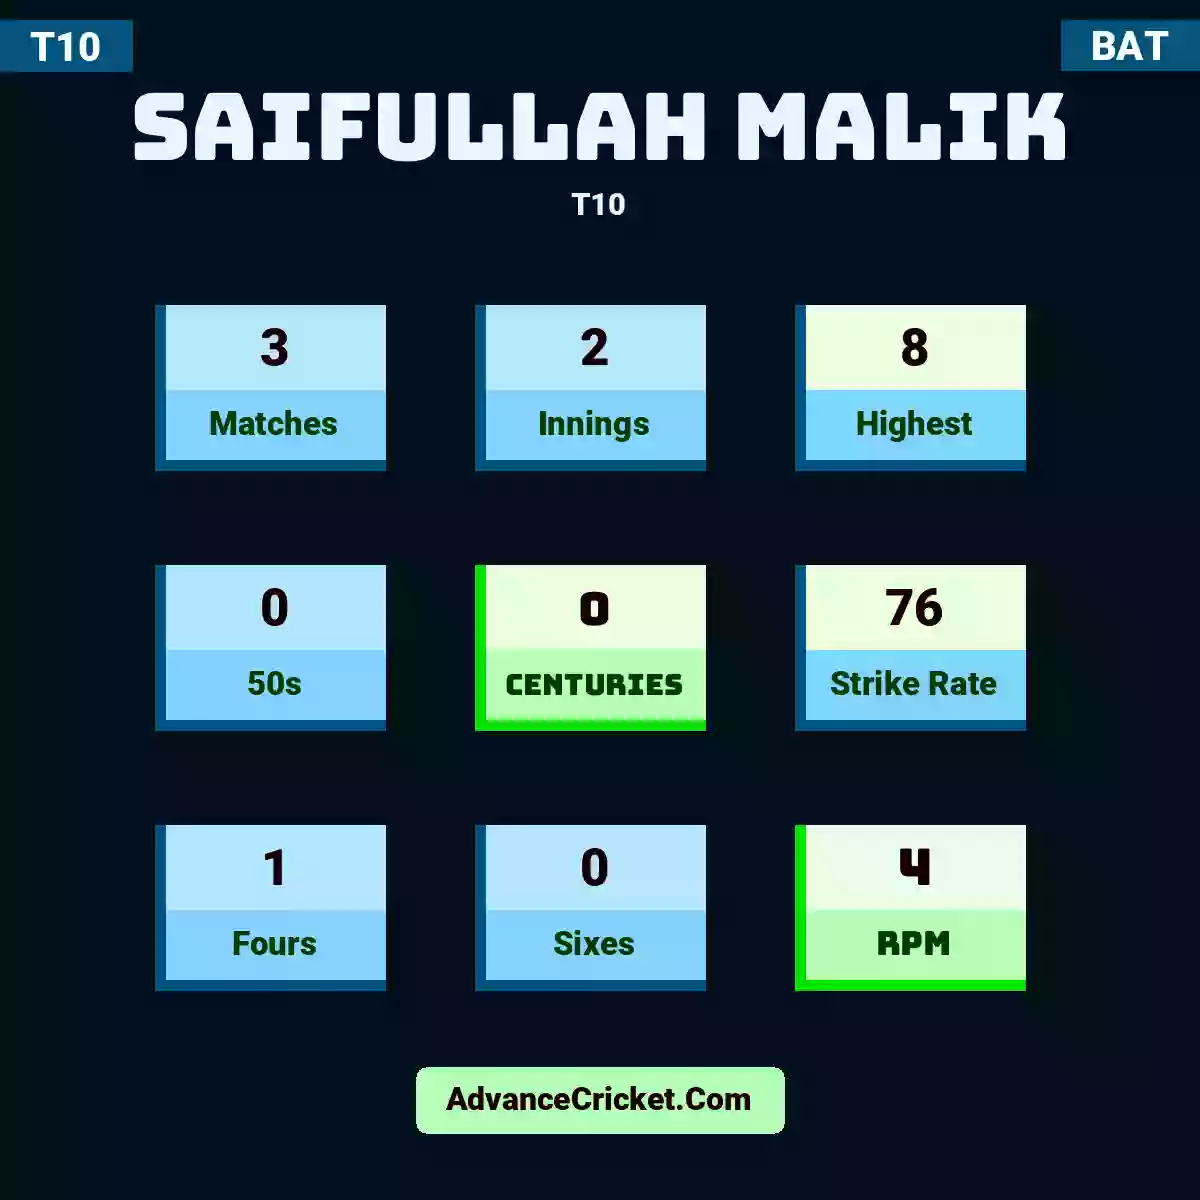 Saifullah Malik T10 , Saifullah Malik played 3 matches, scored 8 runs as highest, 0 half-centuries, and 0 centuries, with a strike rate of 76. S.Malik hit 1 fours and 0 sixes, with an RPM of 4.